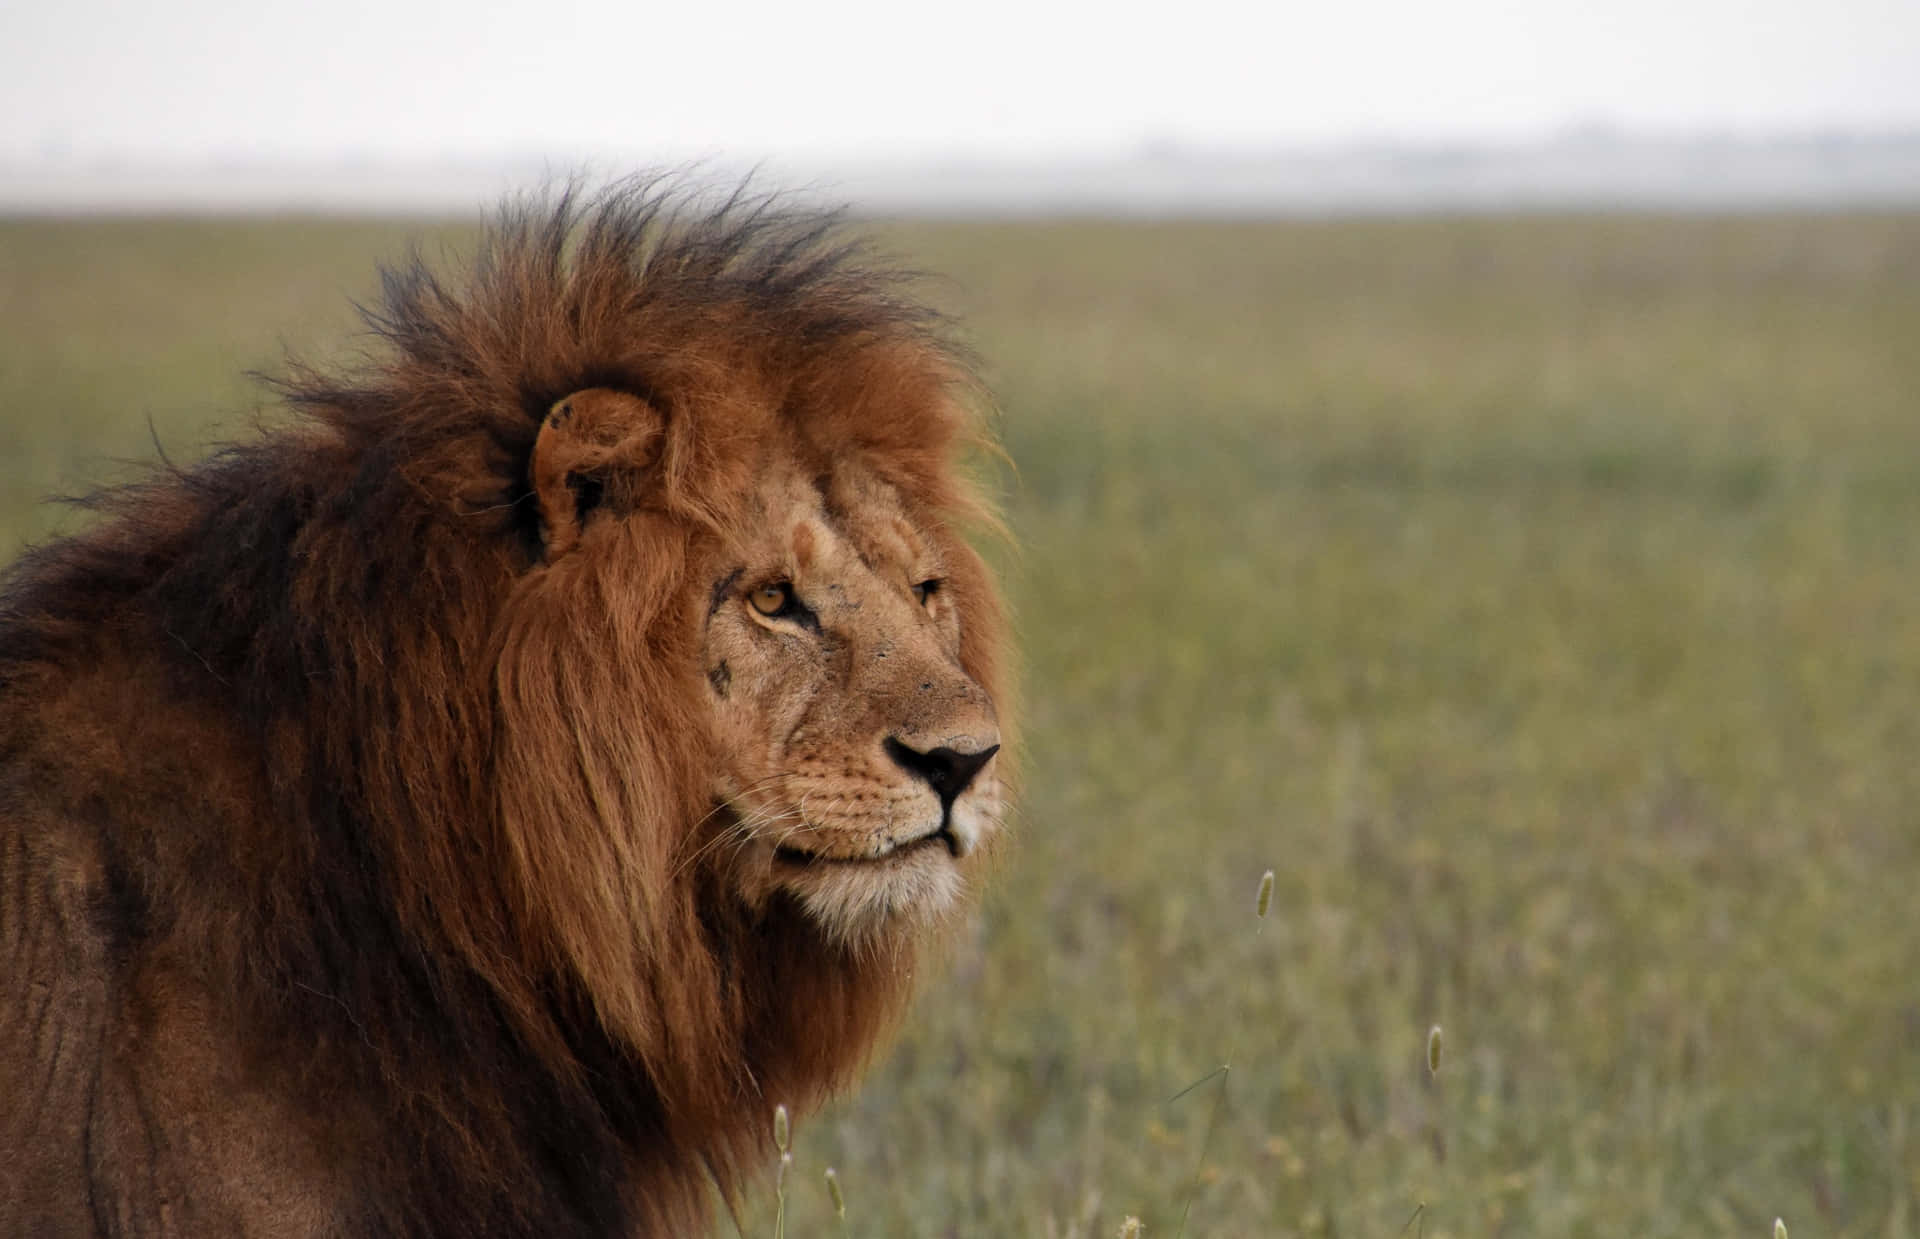 Fierce yet Majestic - A Lion roams the African Savannah